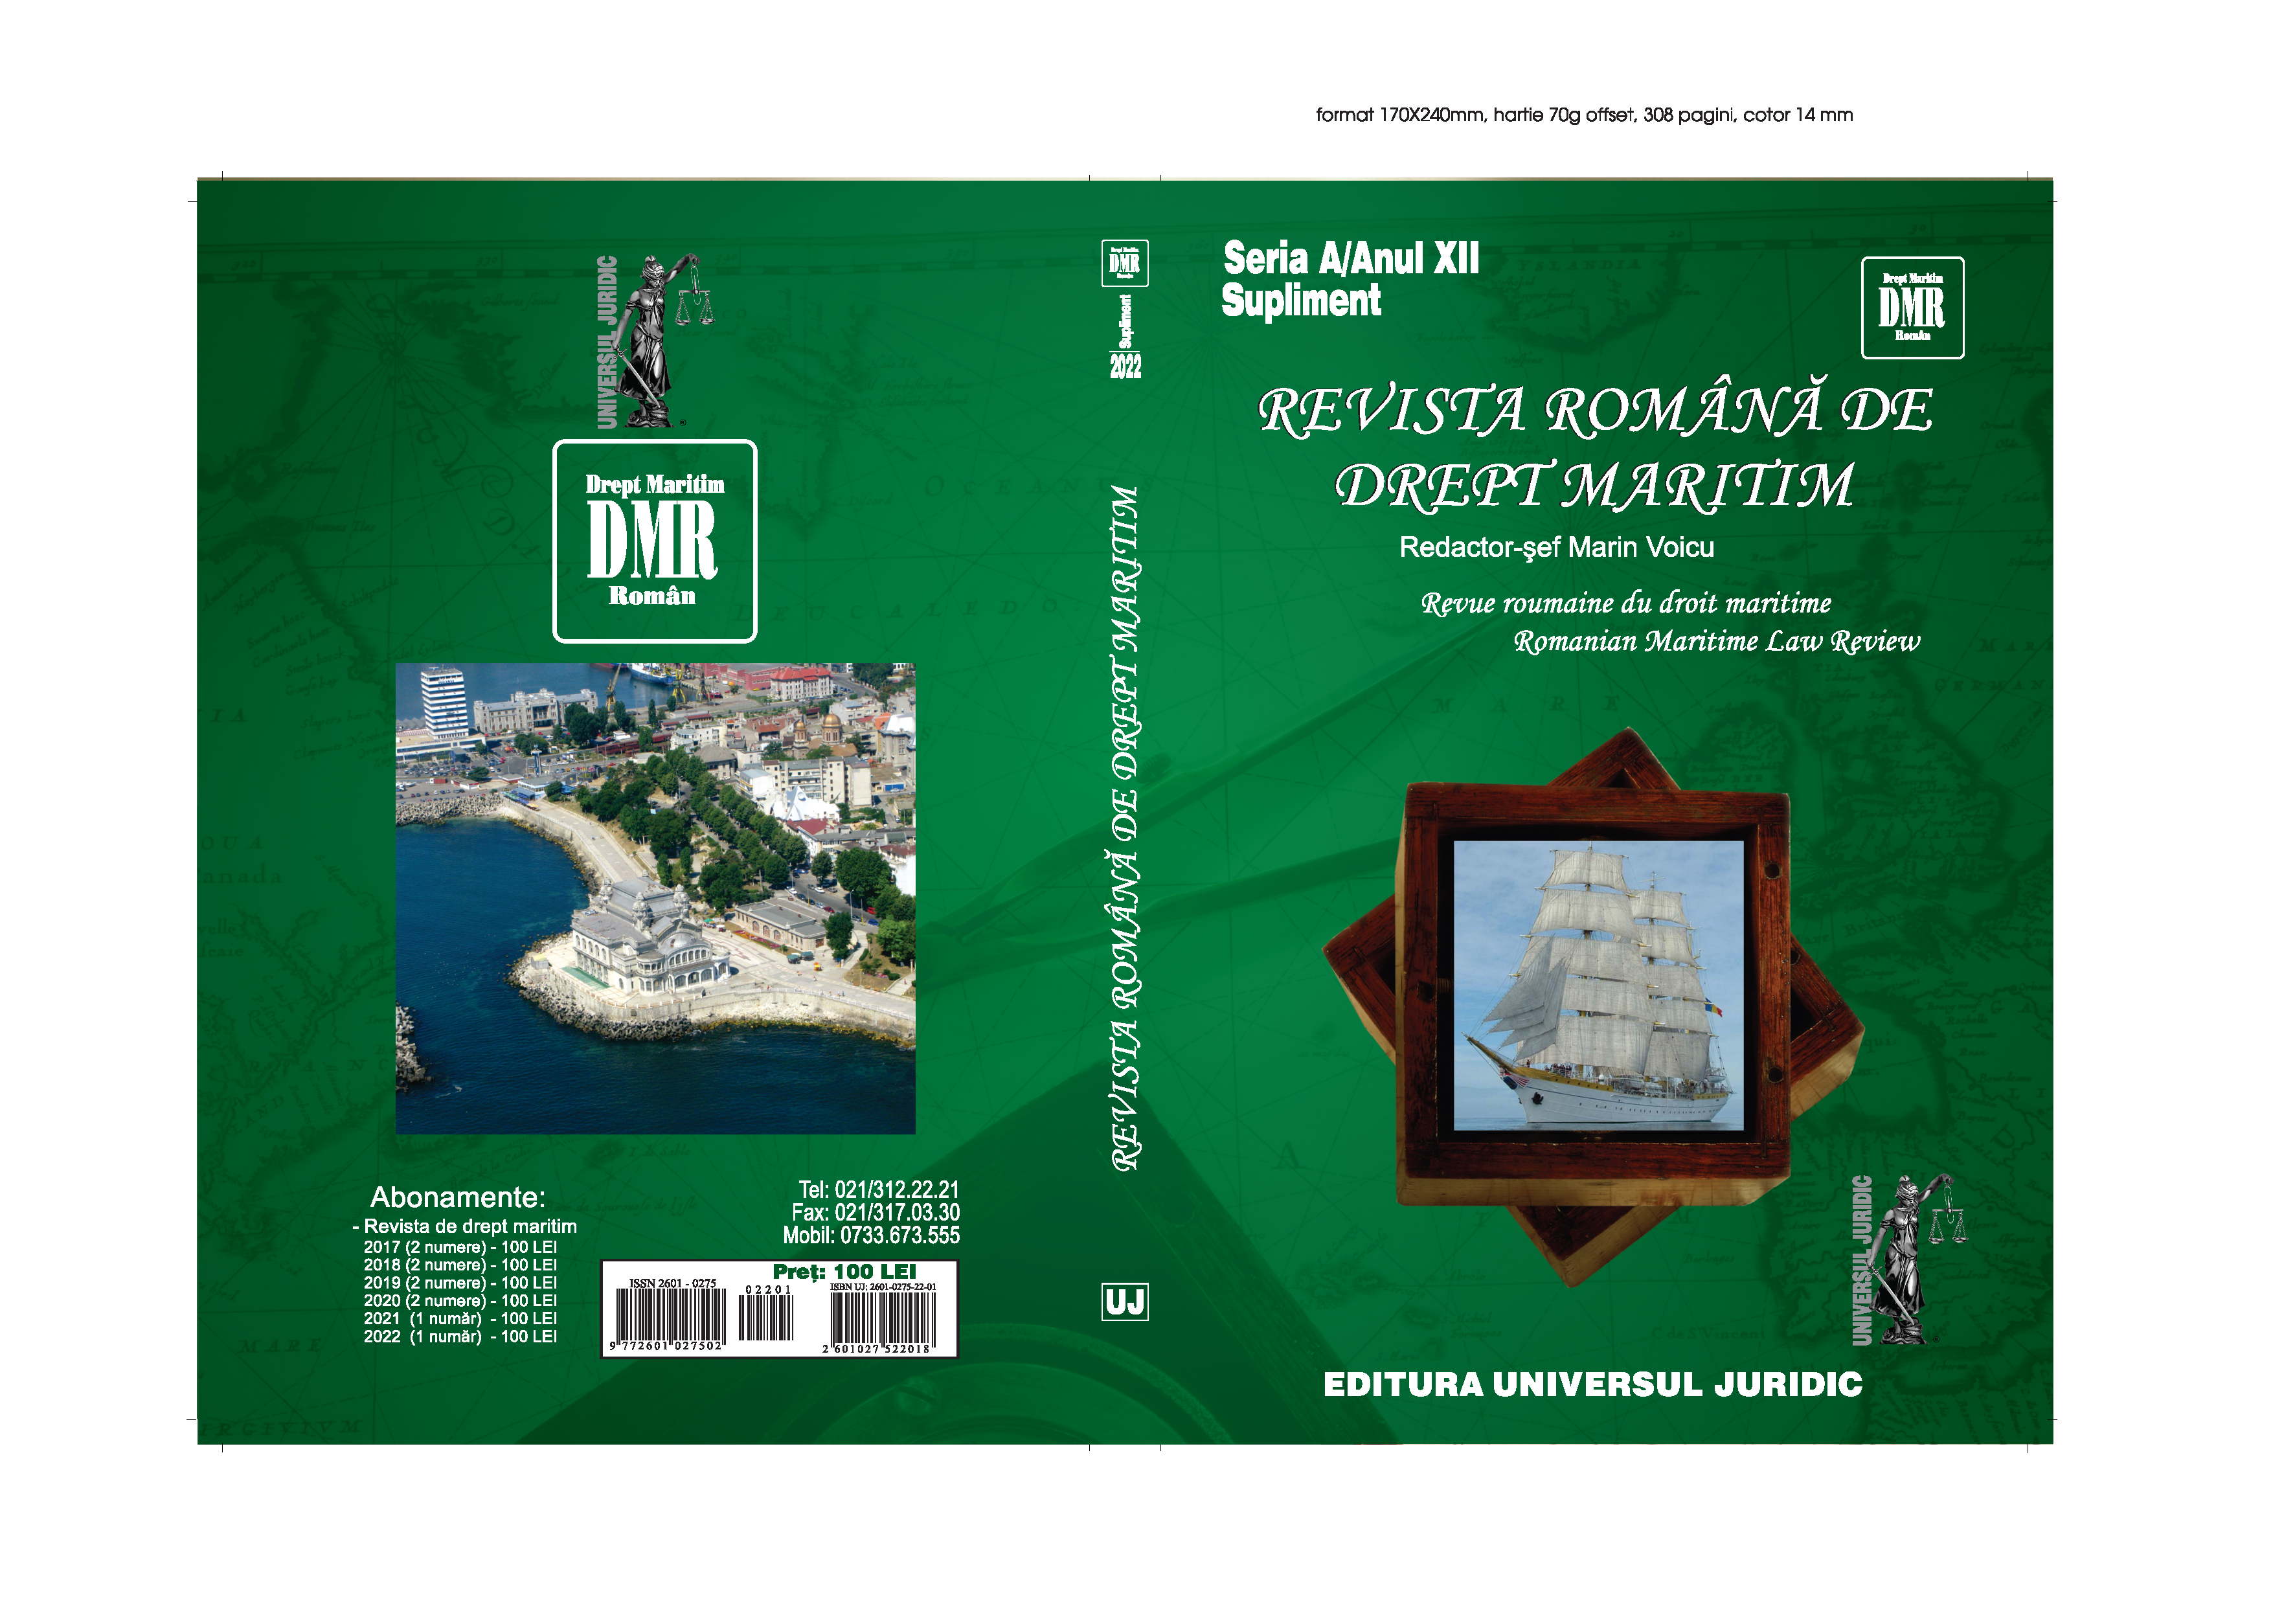 Dobrogea and the Navy